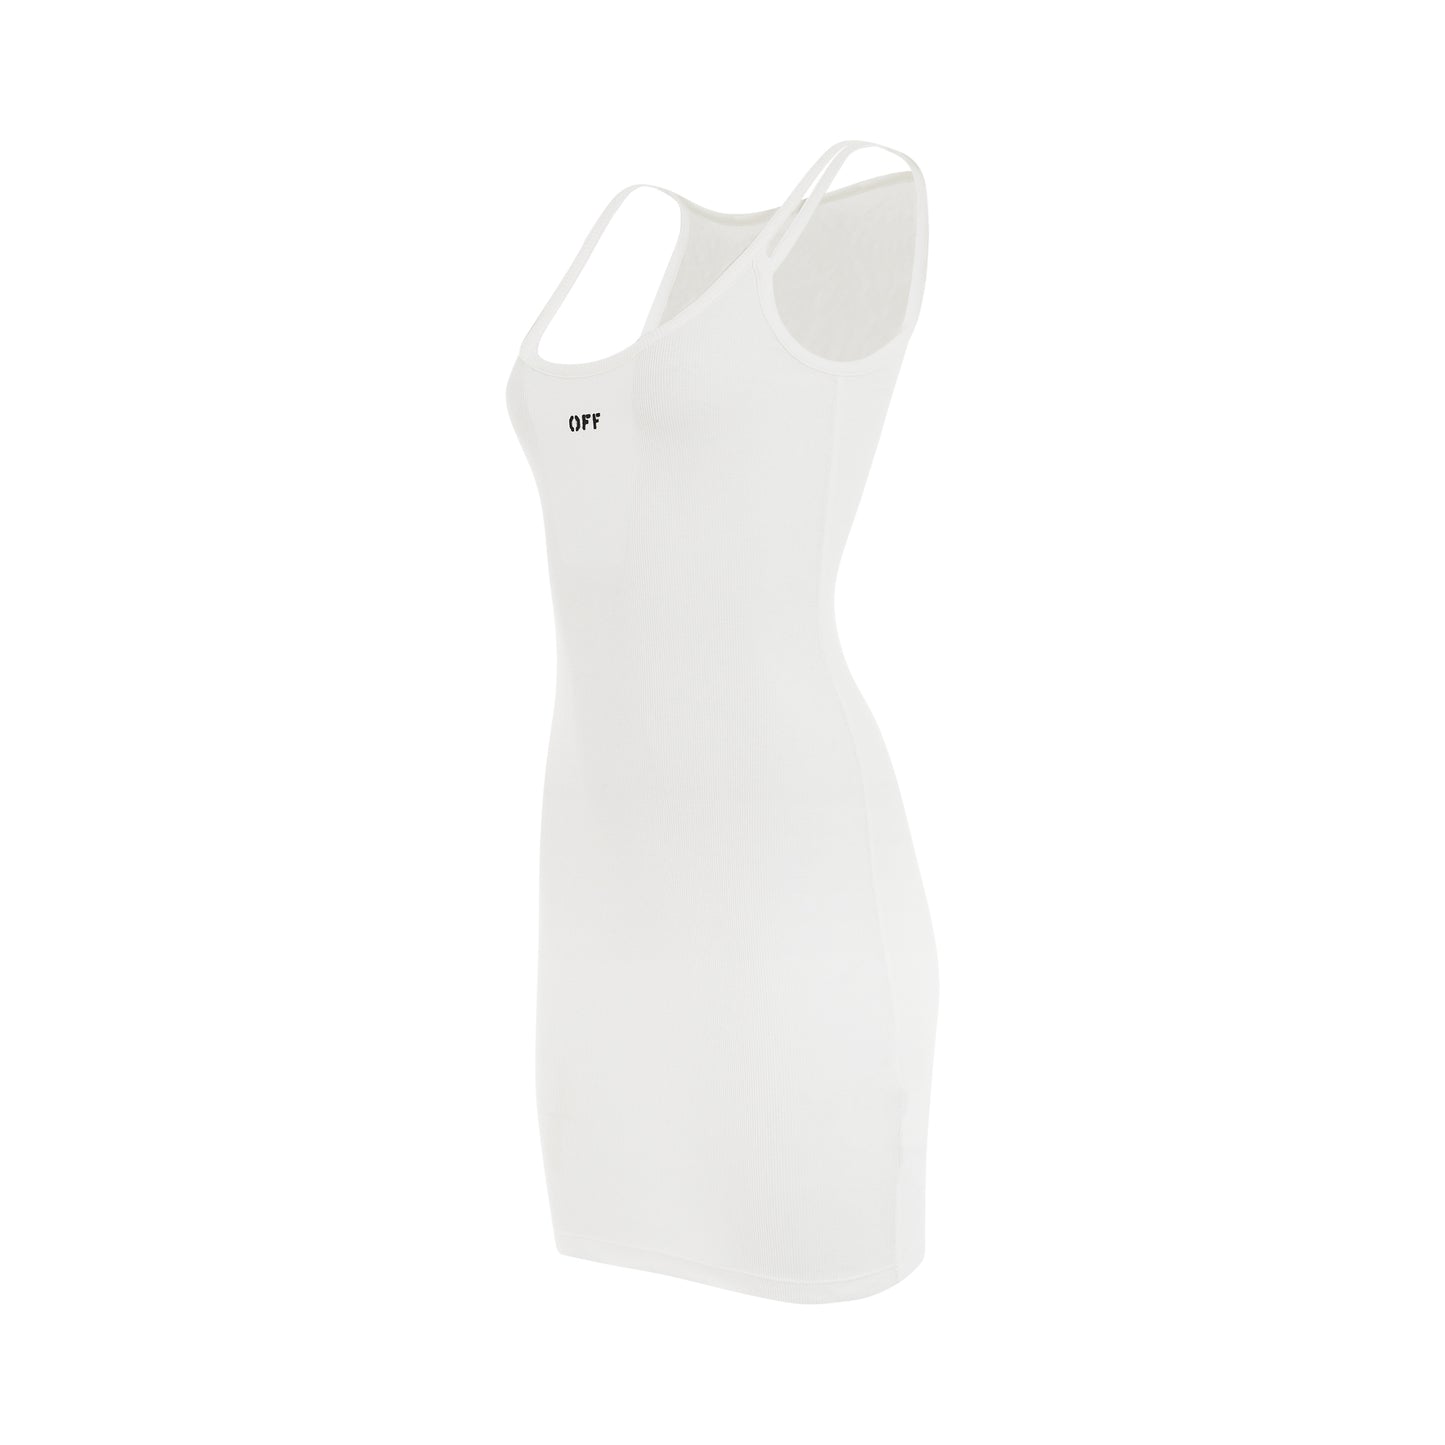 Off Stamp Basic Ribbed Dress in White/Black